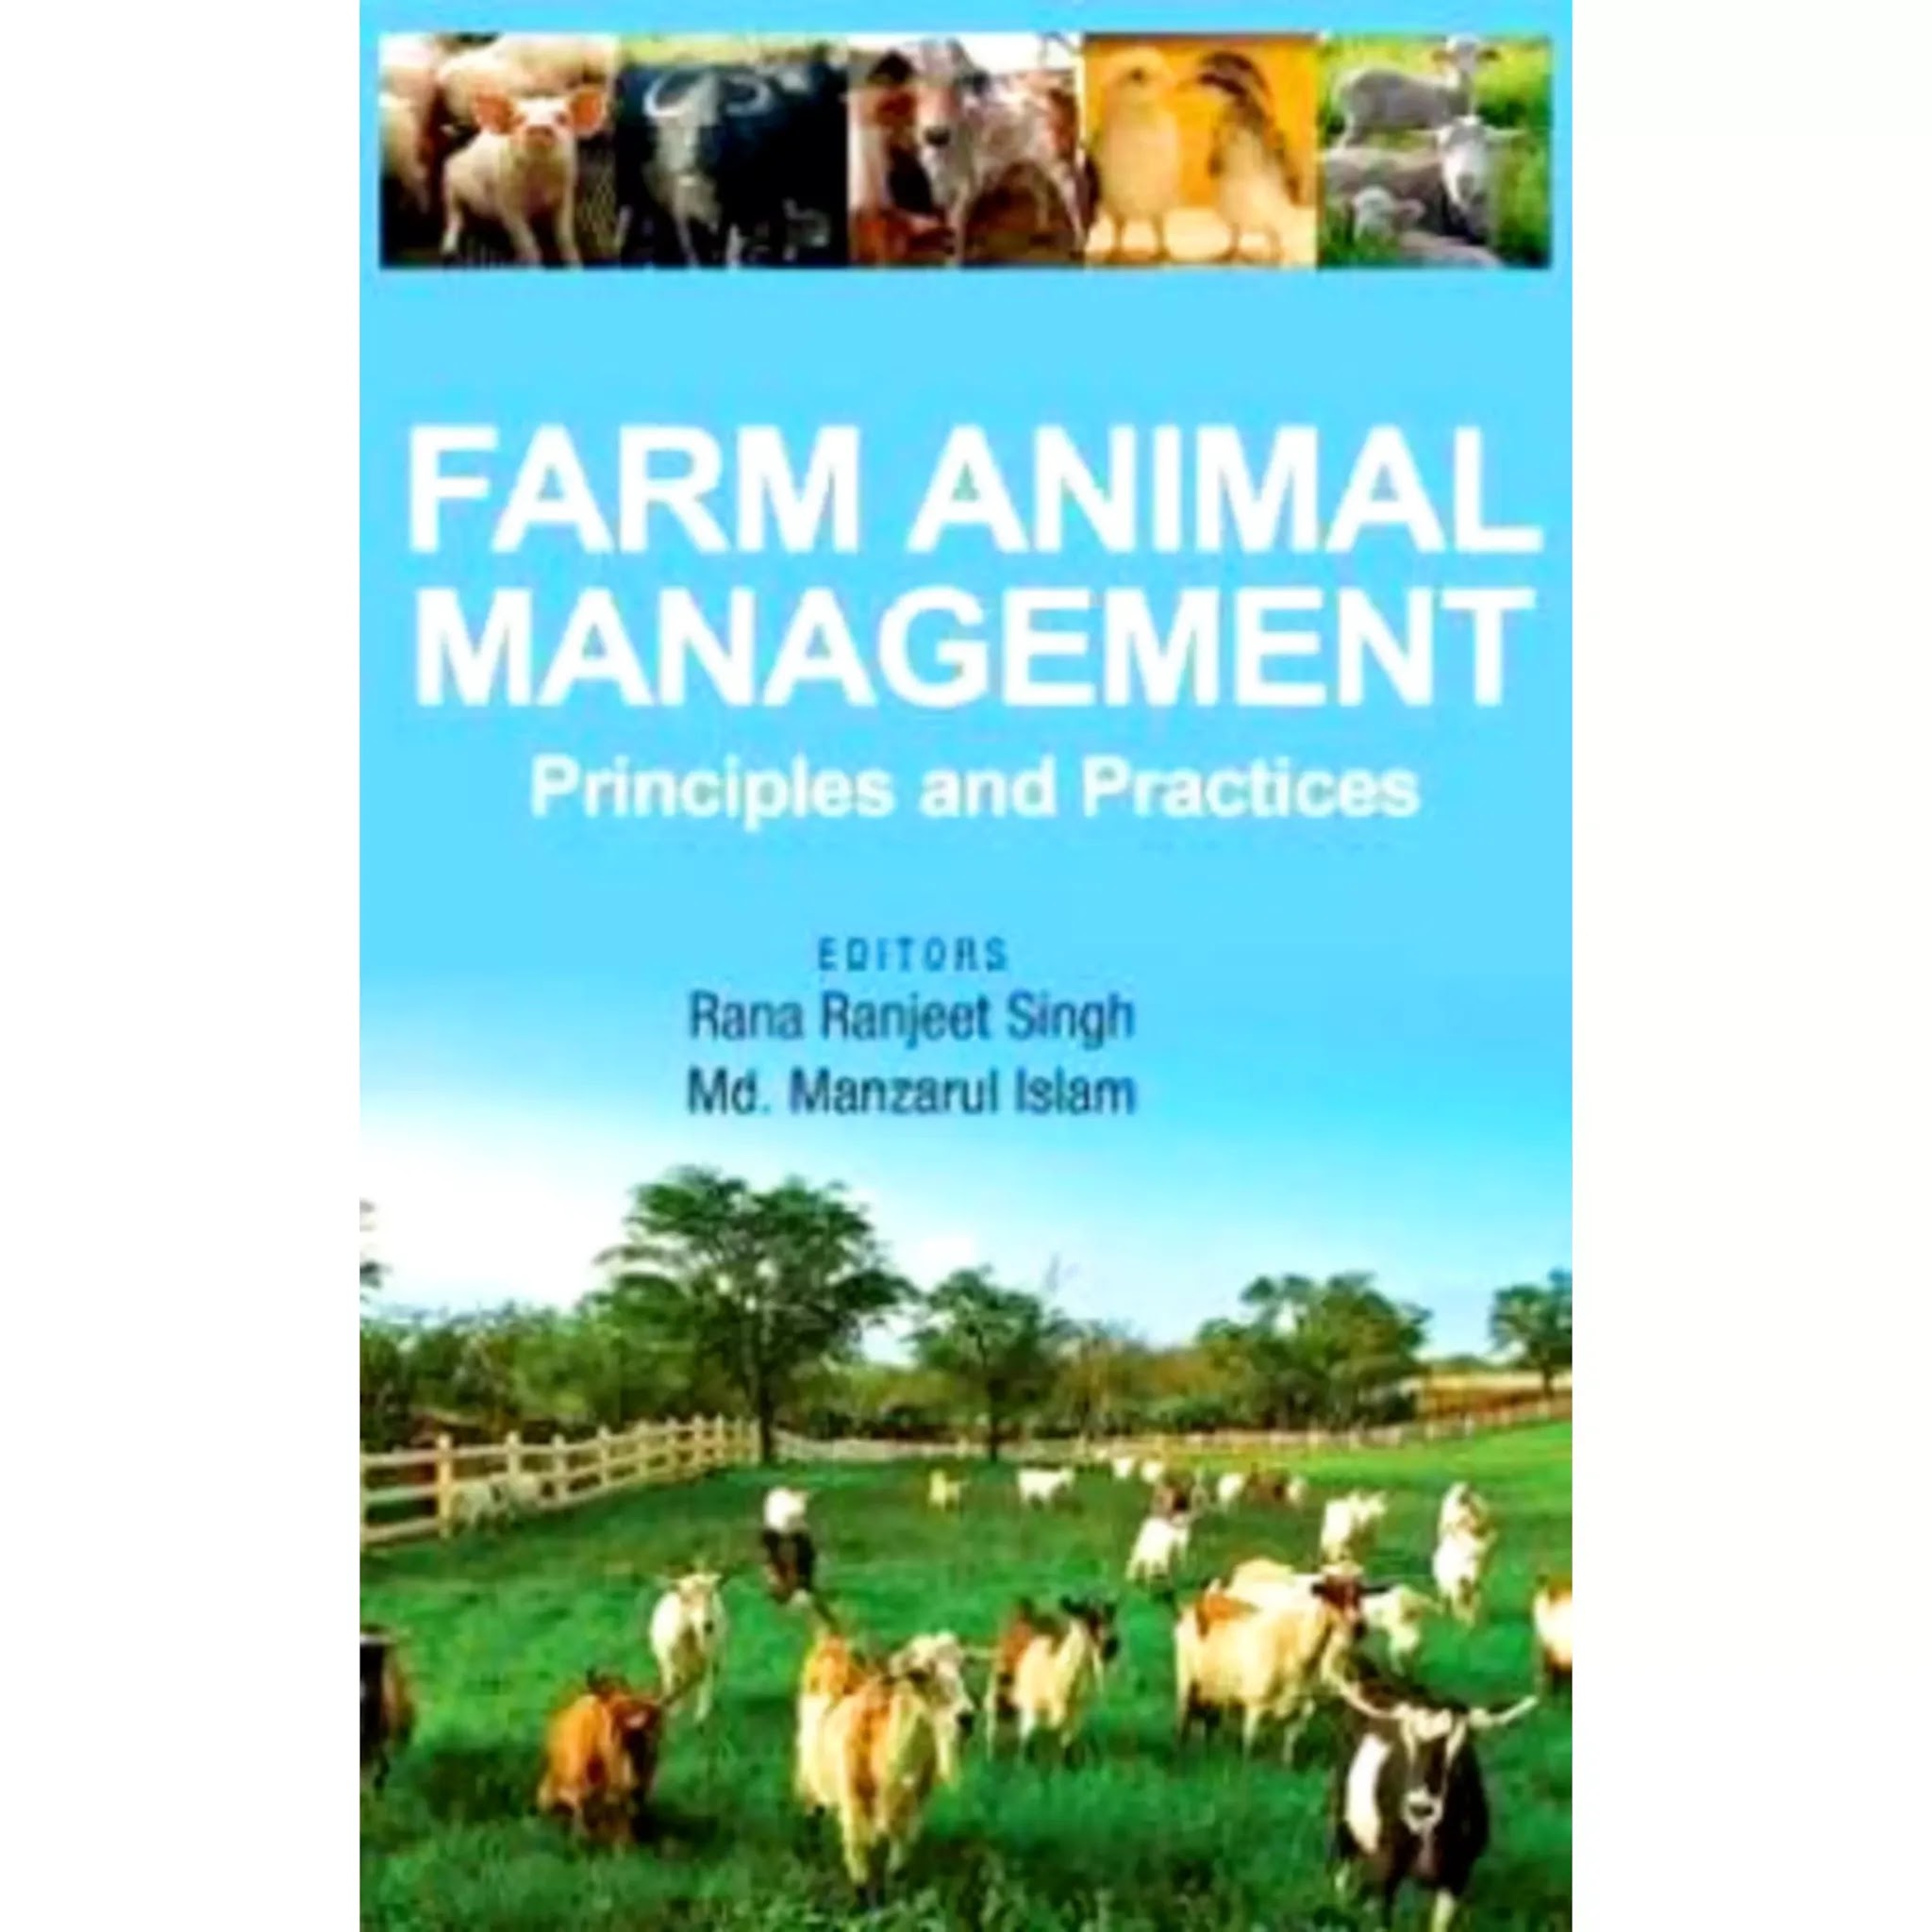 Farm Animal Management by Rana Ranjeet Singh and Md Manzarul Islam